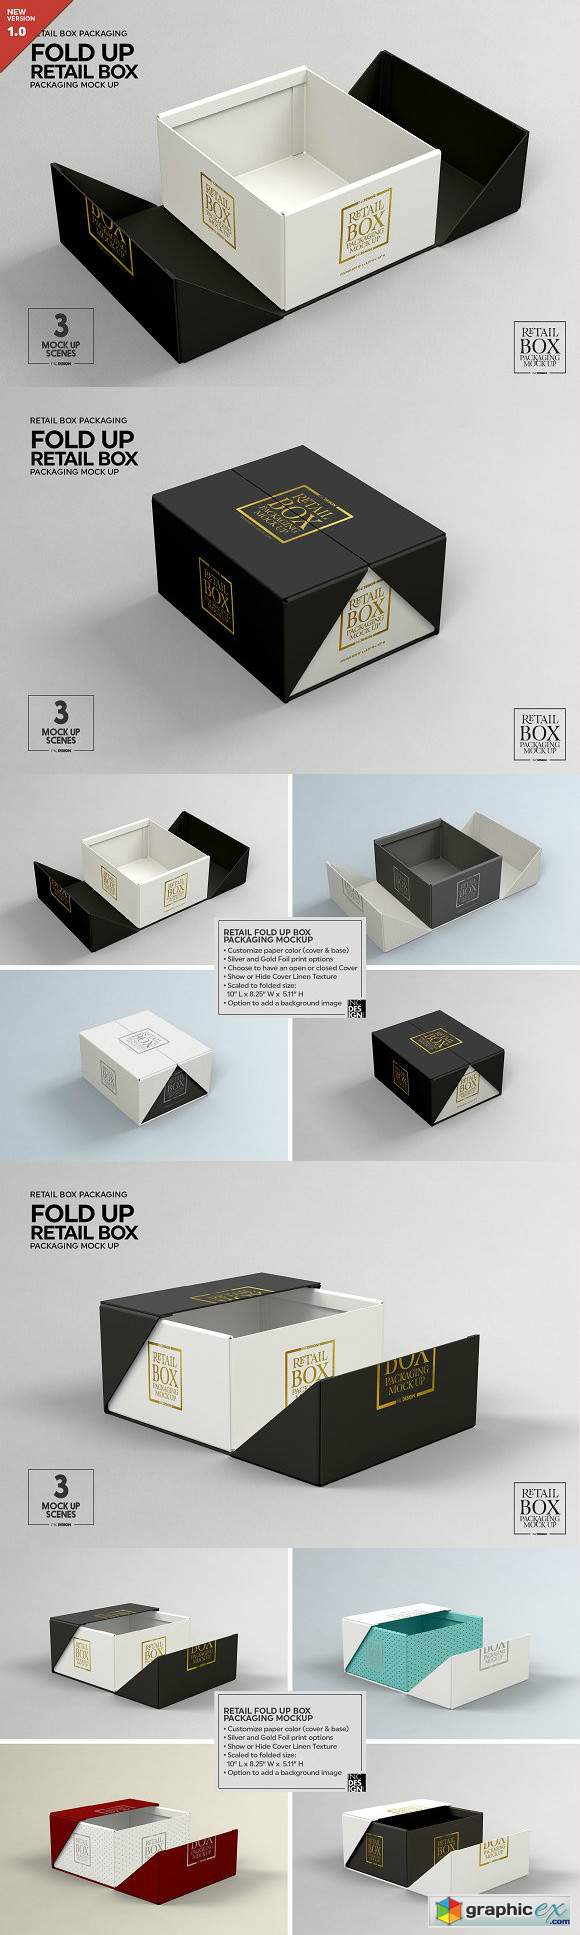 Fold Up Retail Box Packaging Mockup